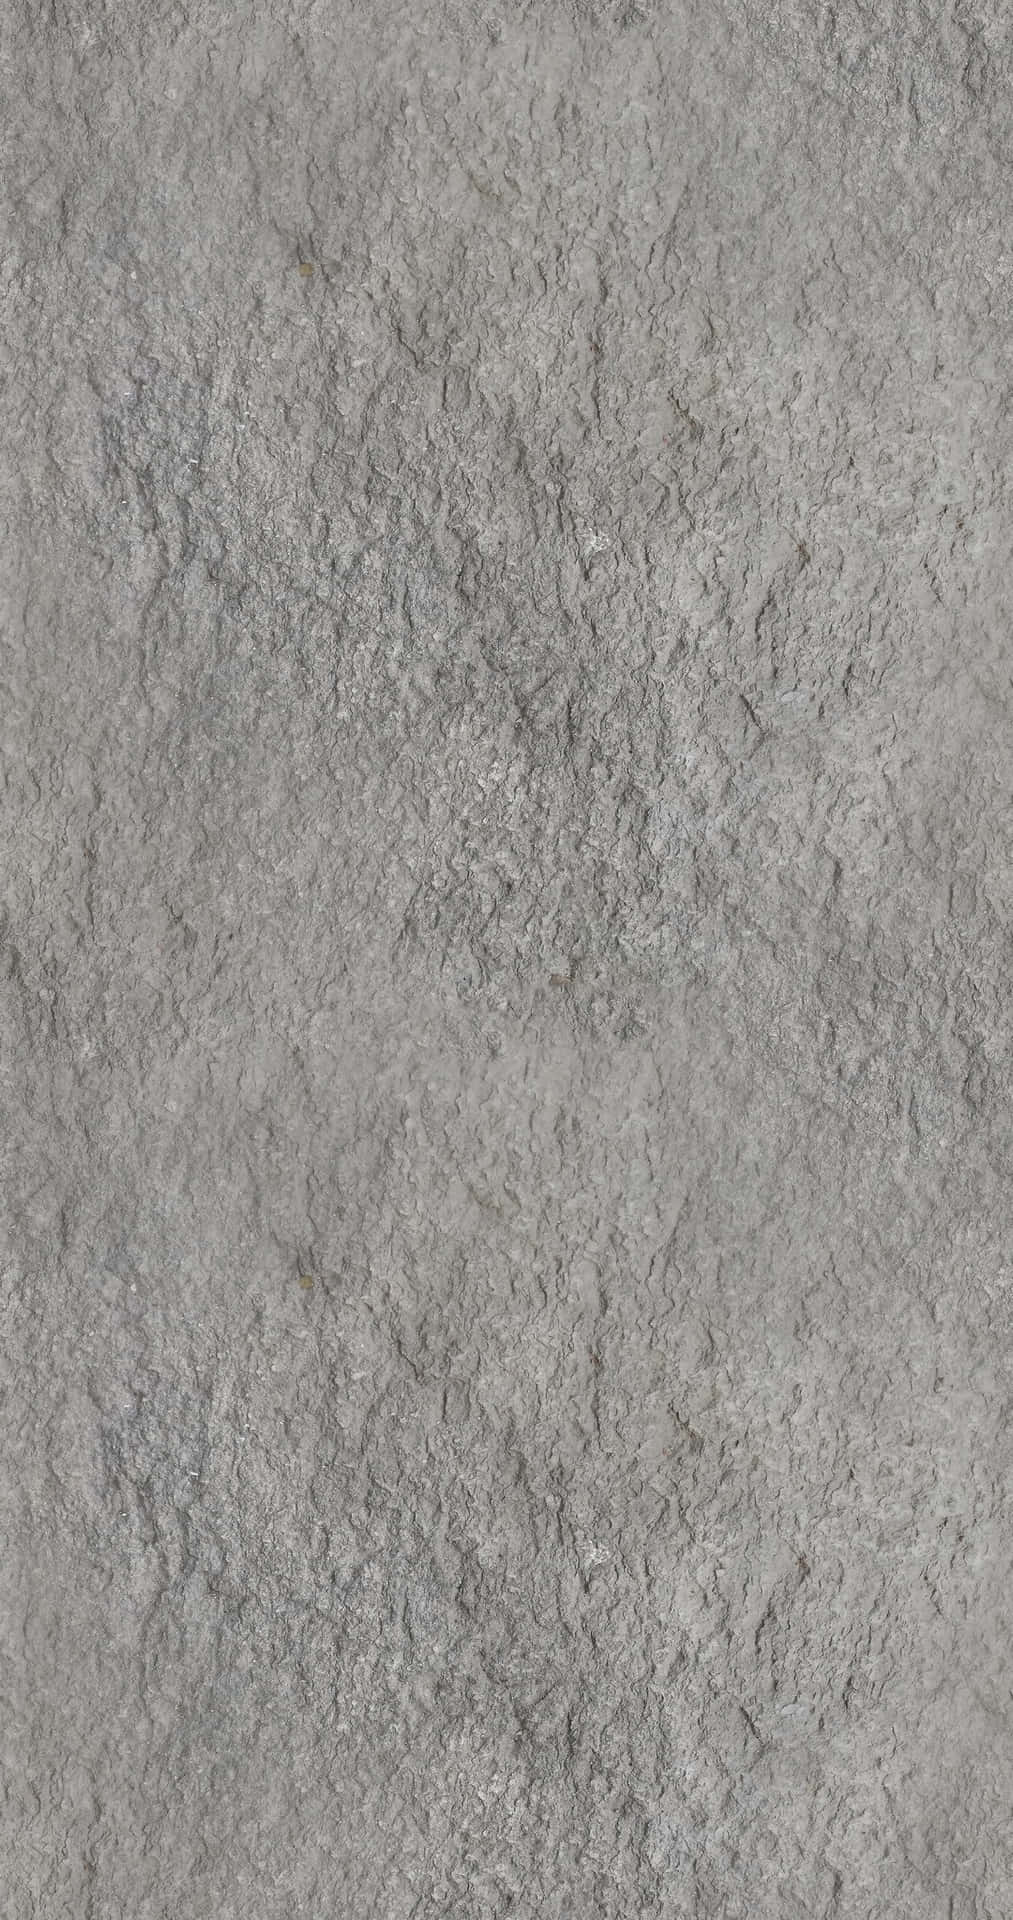 Rough Hard Stone Texture Wallpaper